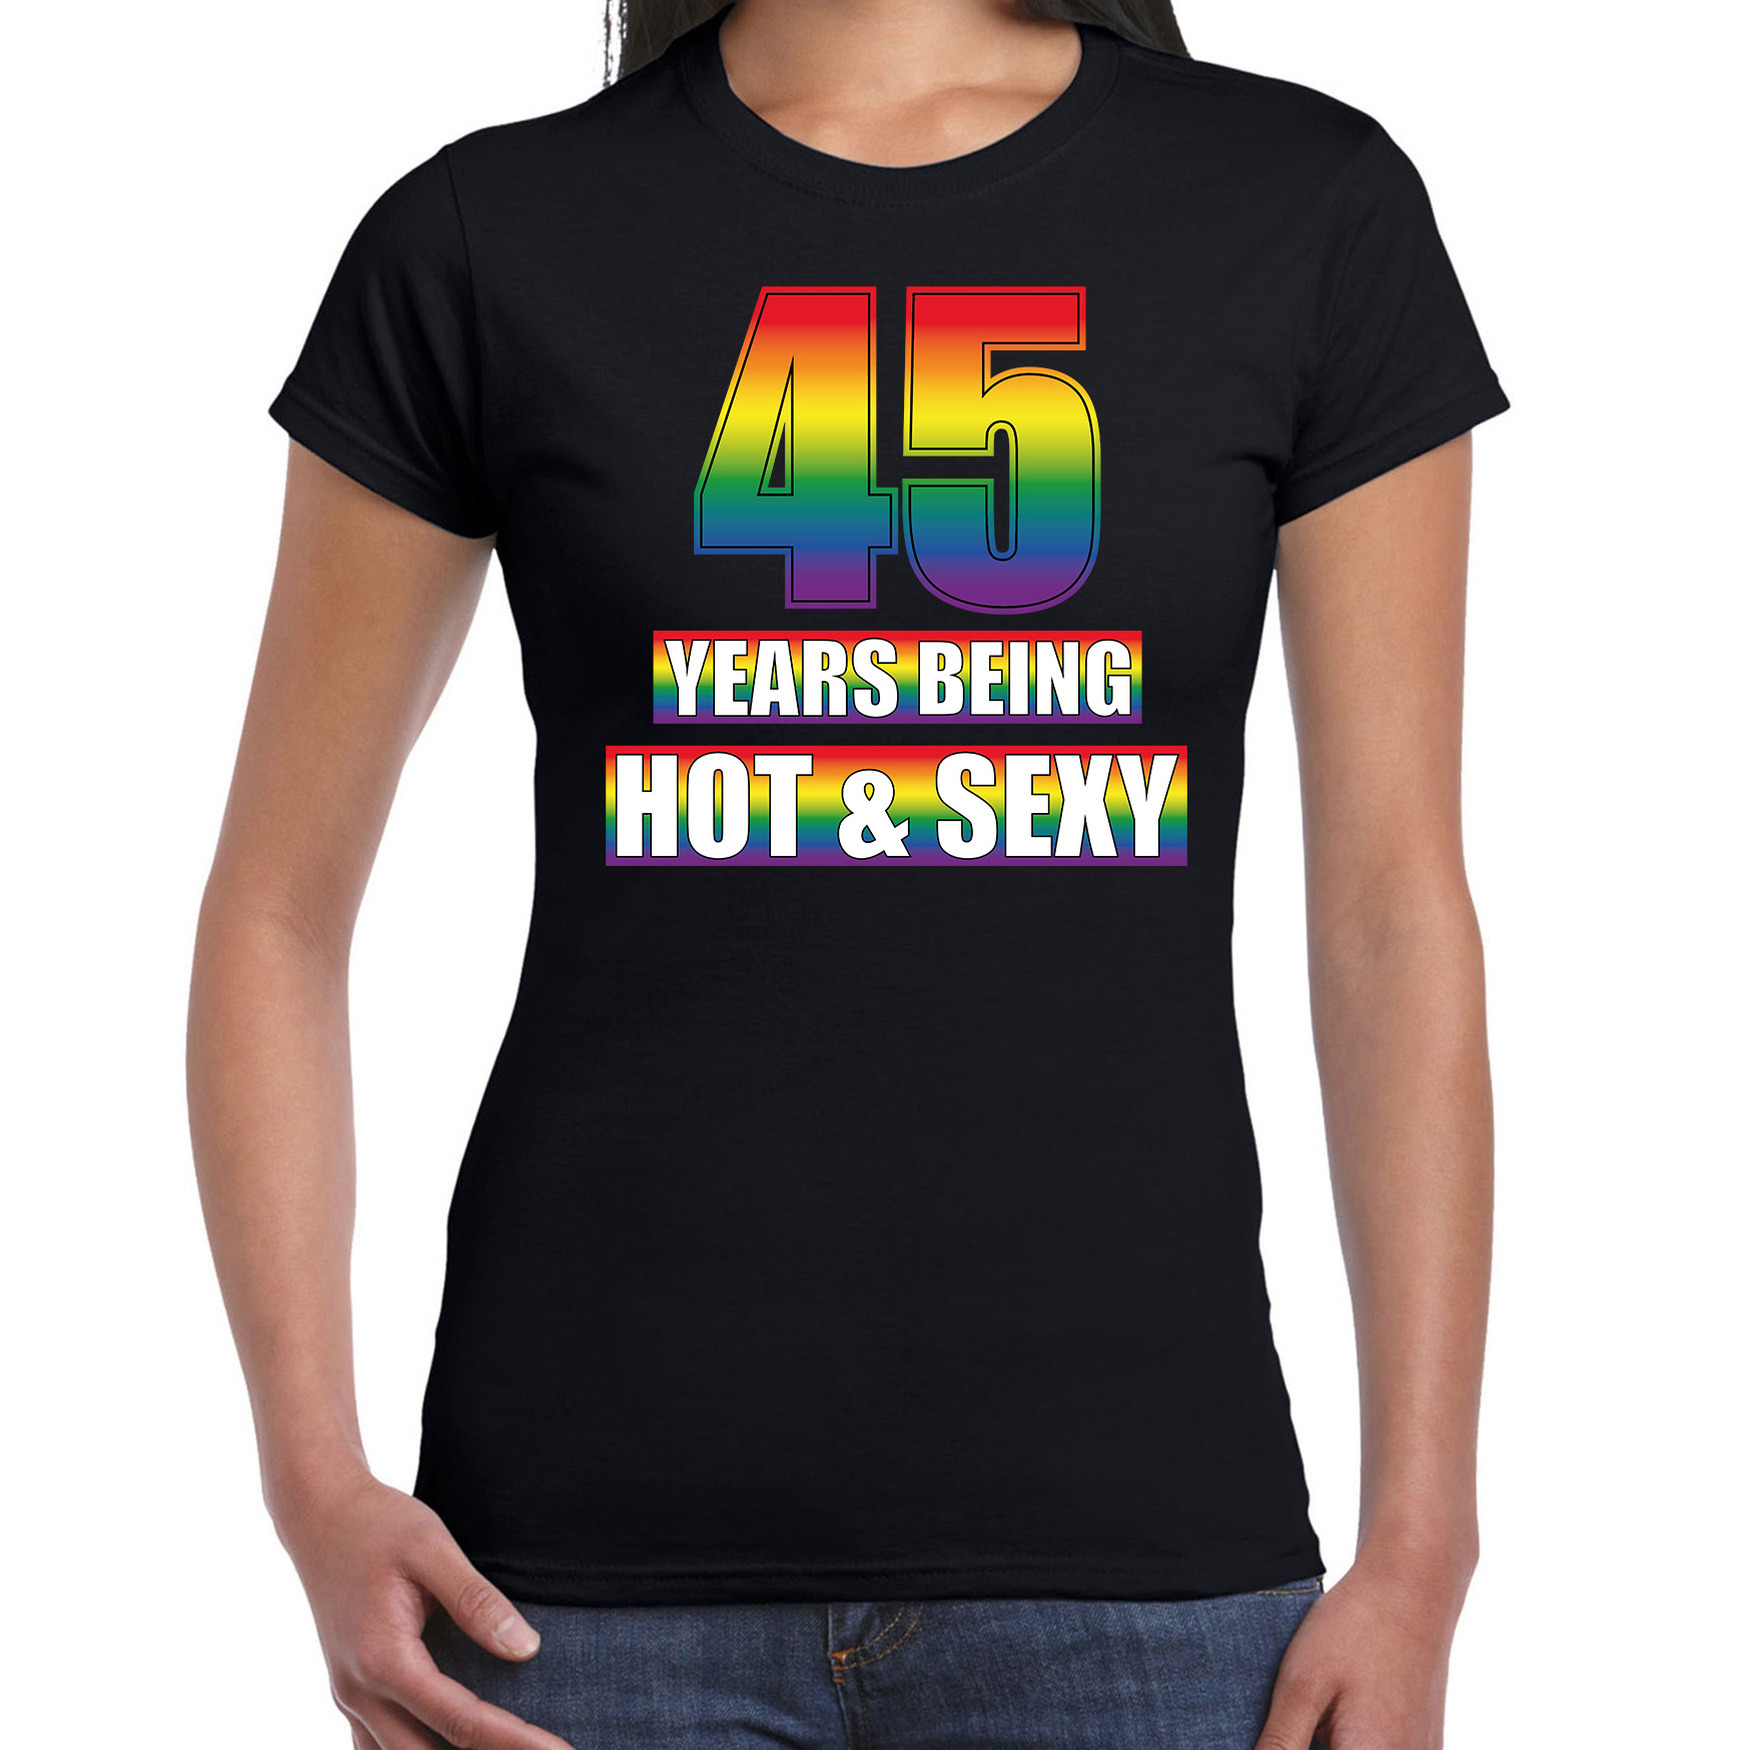 Hot en sexy 45 jaar verjaardag cadeau t-shirt zwart voor dames Gay- LHBT kleding-outfit